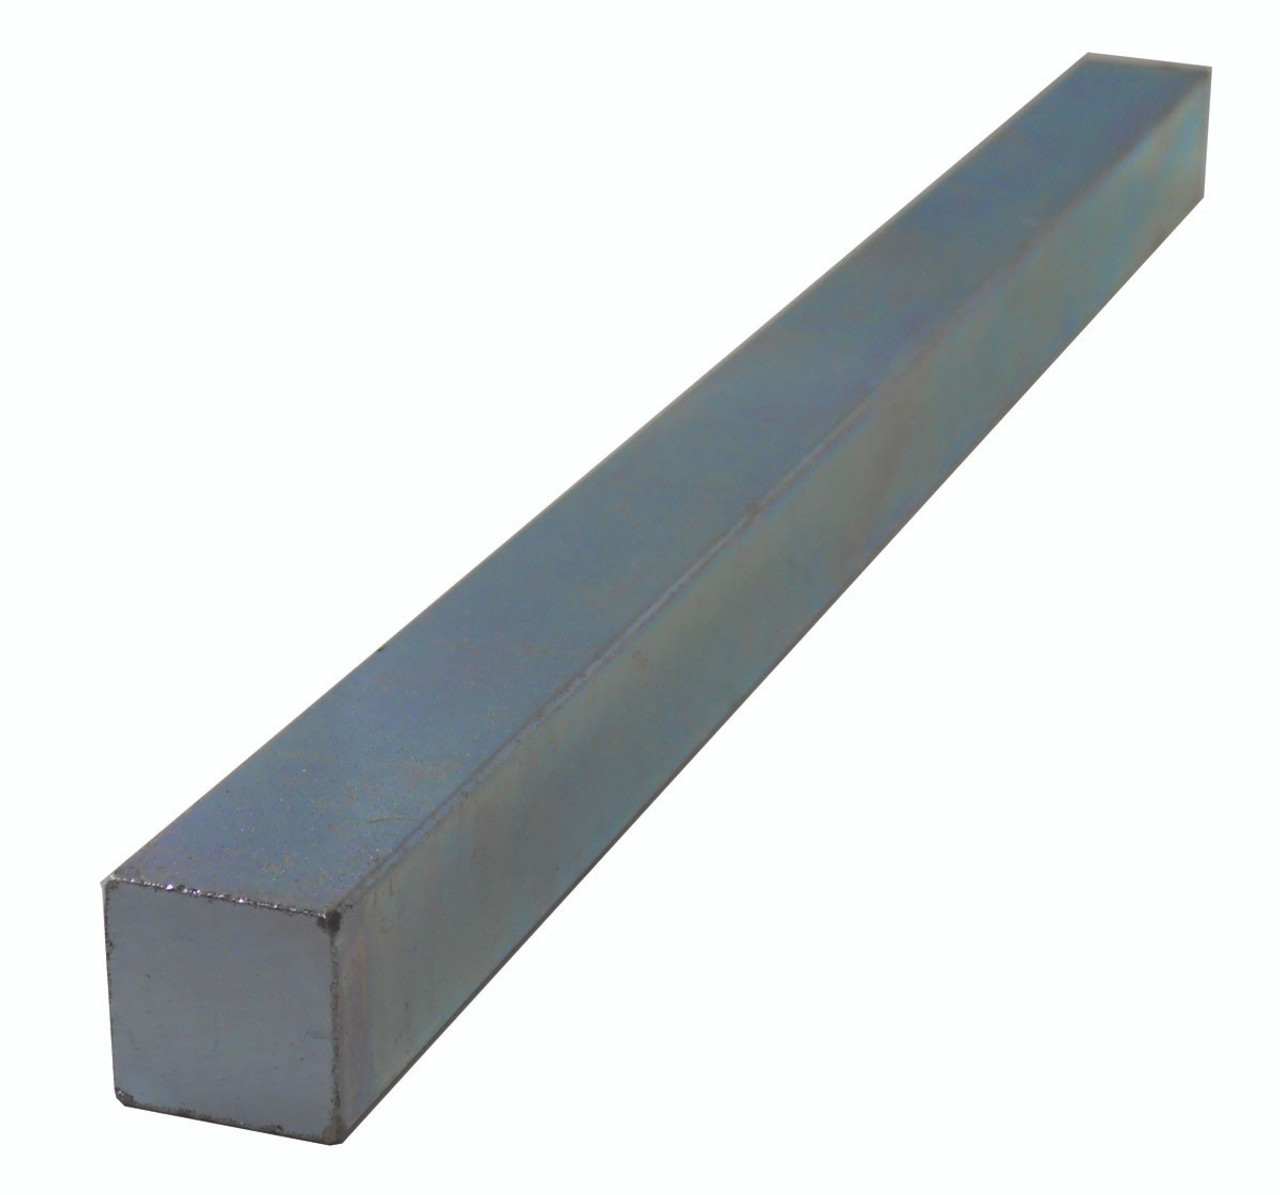 Square SAE 5/16 x 36" Zinc Plated Steel Keystock  .313-36